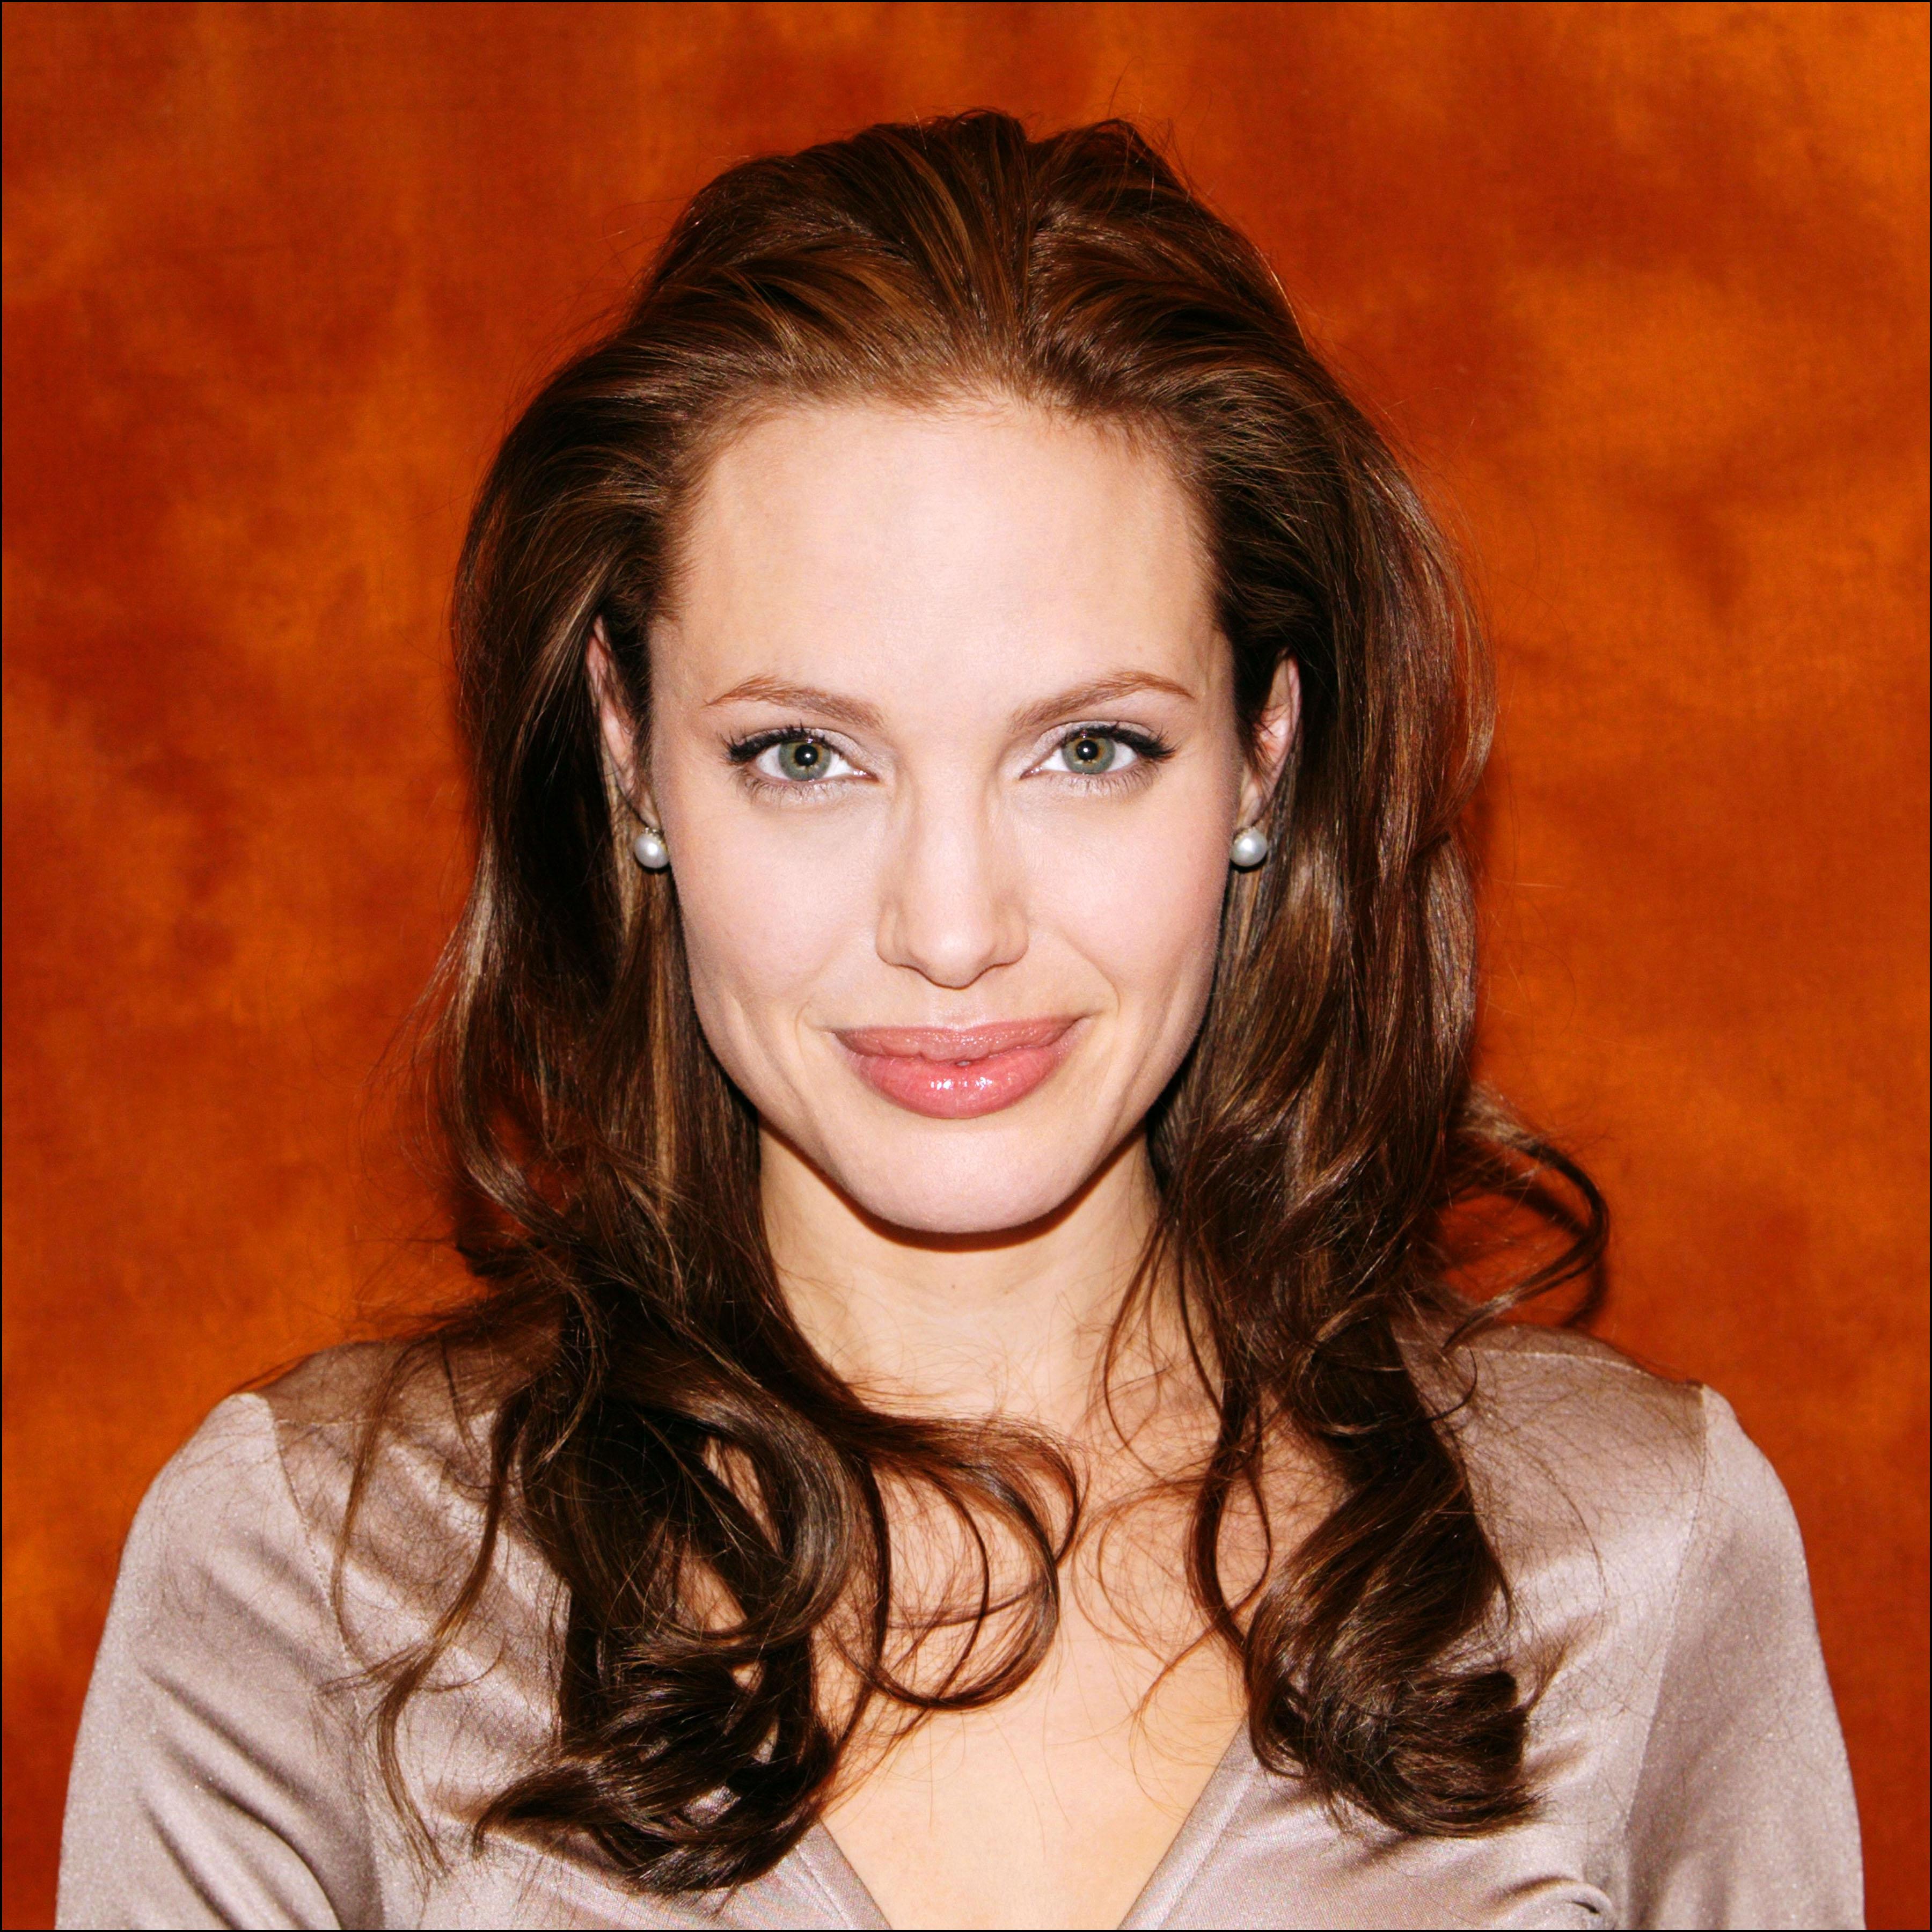 Photo №20163 Angelina Jolie.